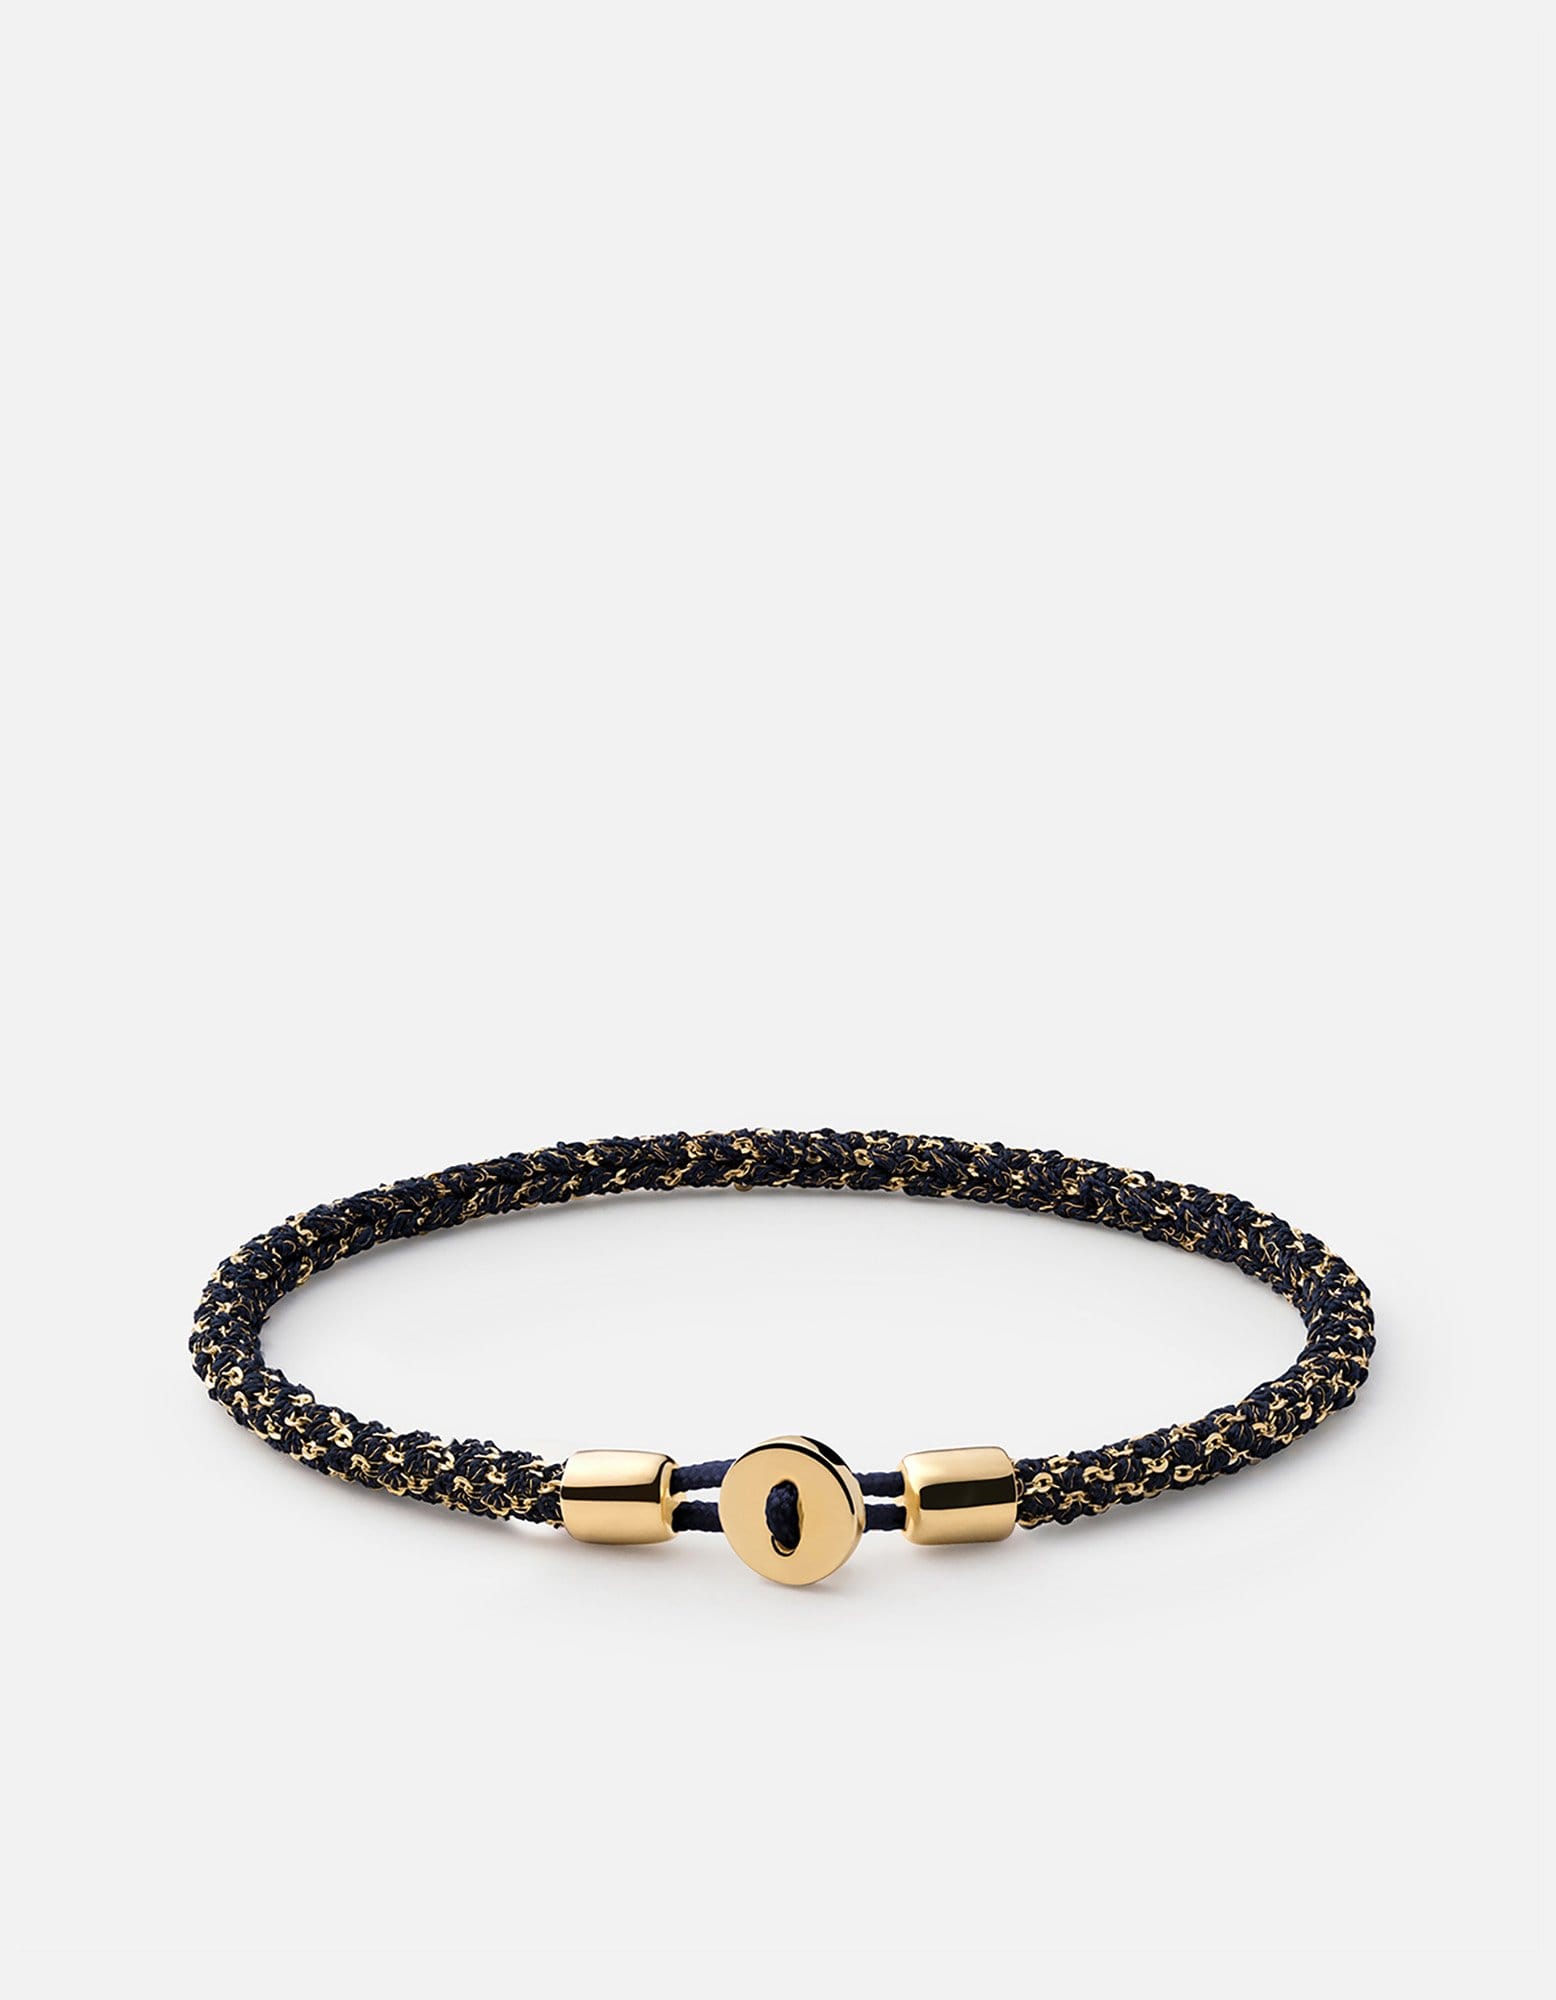 Nexus Woven Bracelet, Gold Vermeil, Polished | Women's Bracelets | Miansai